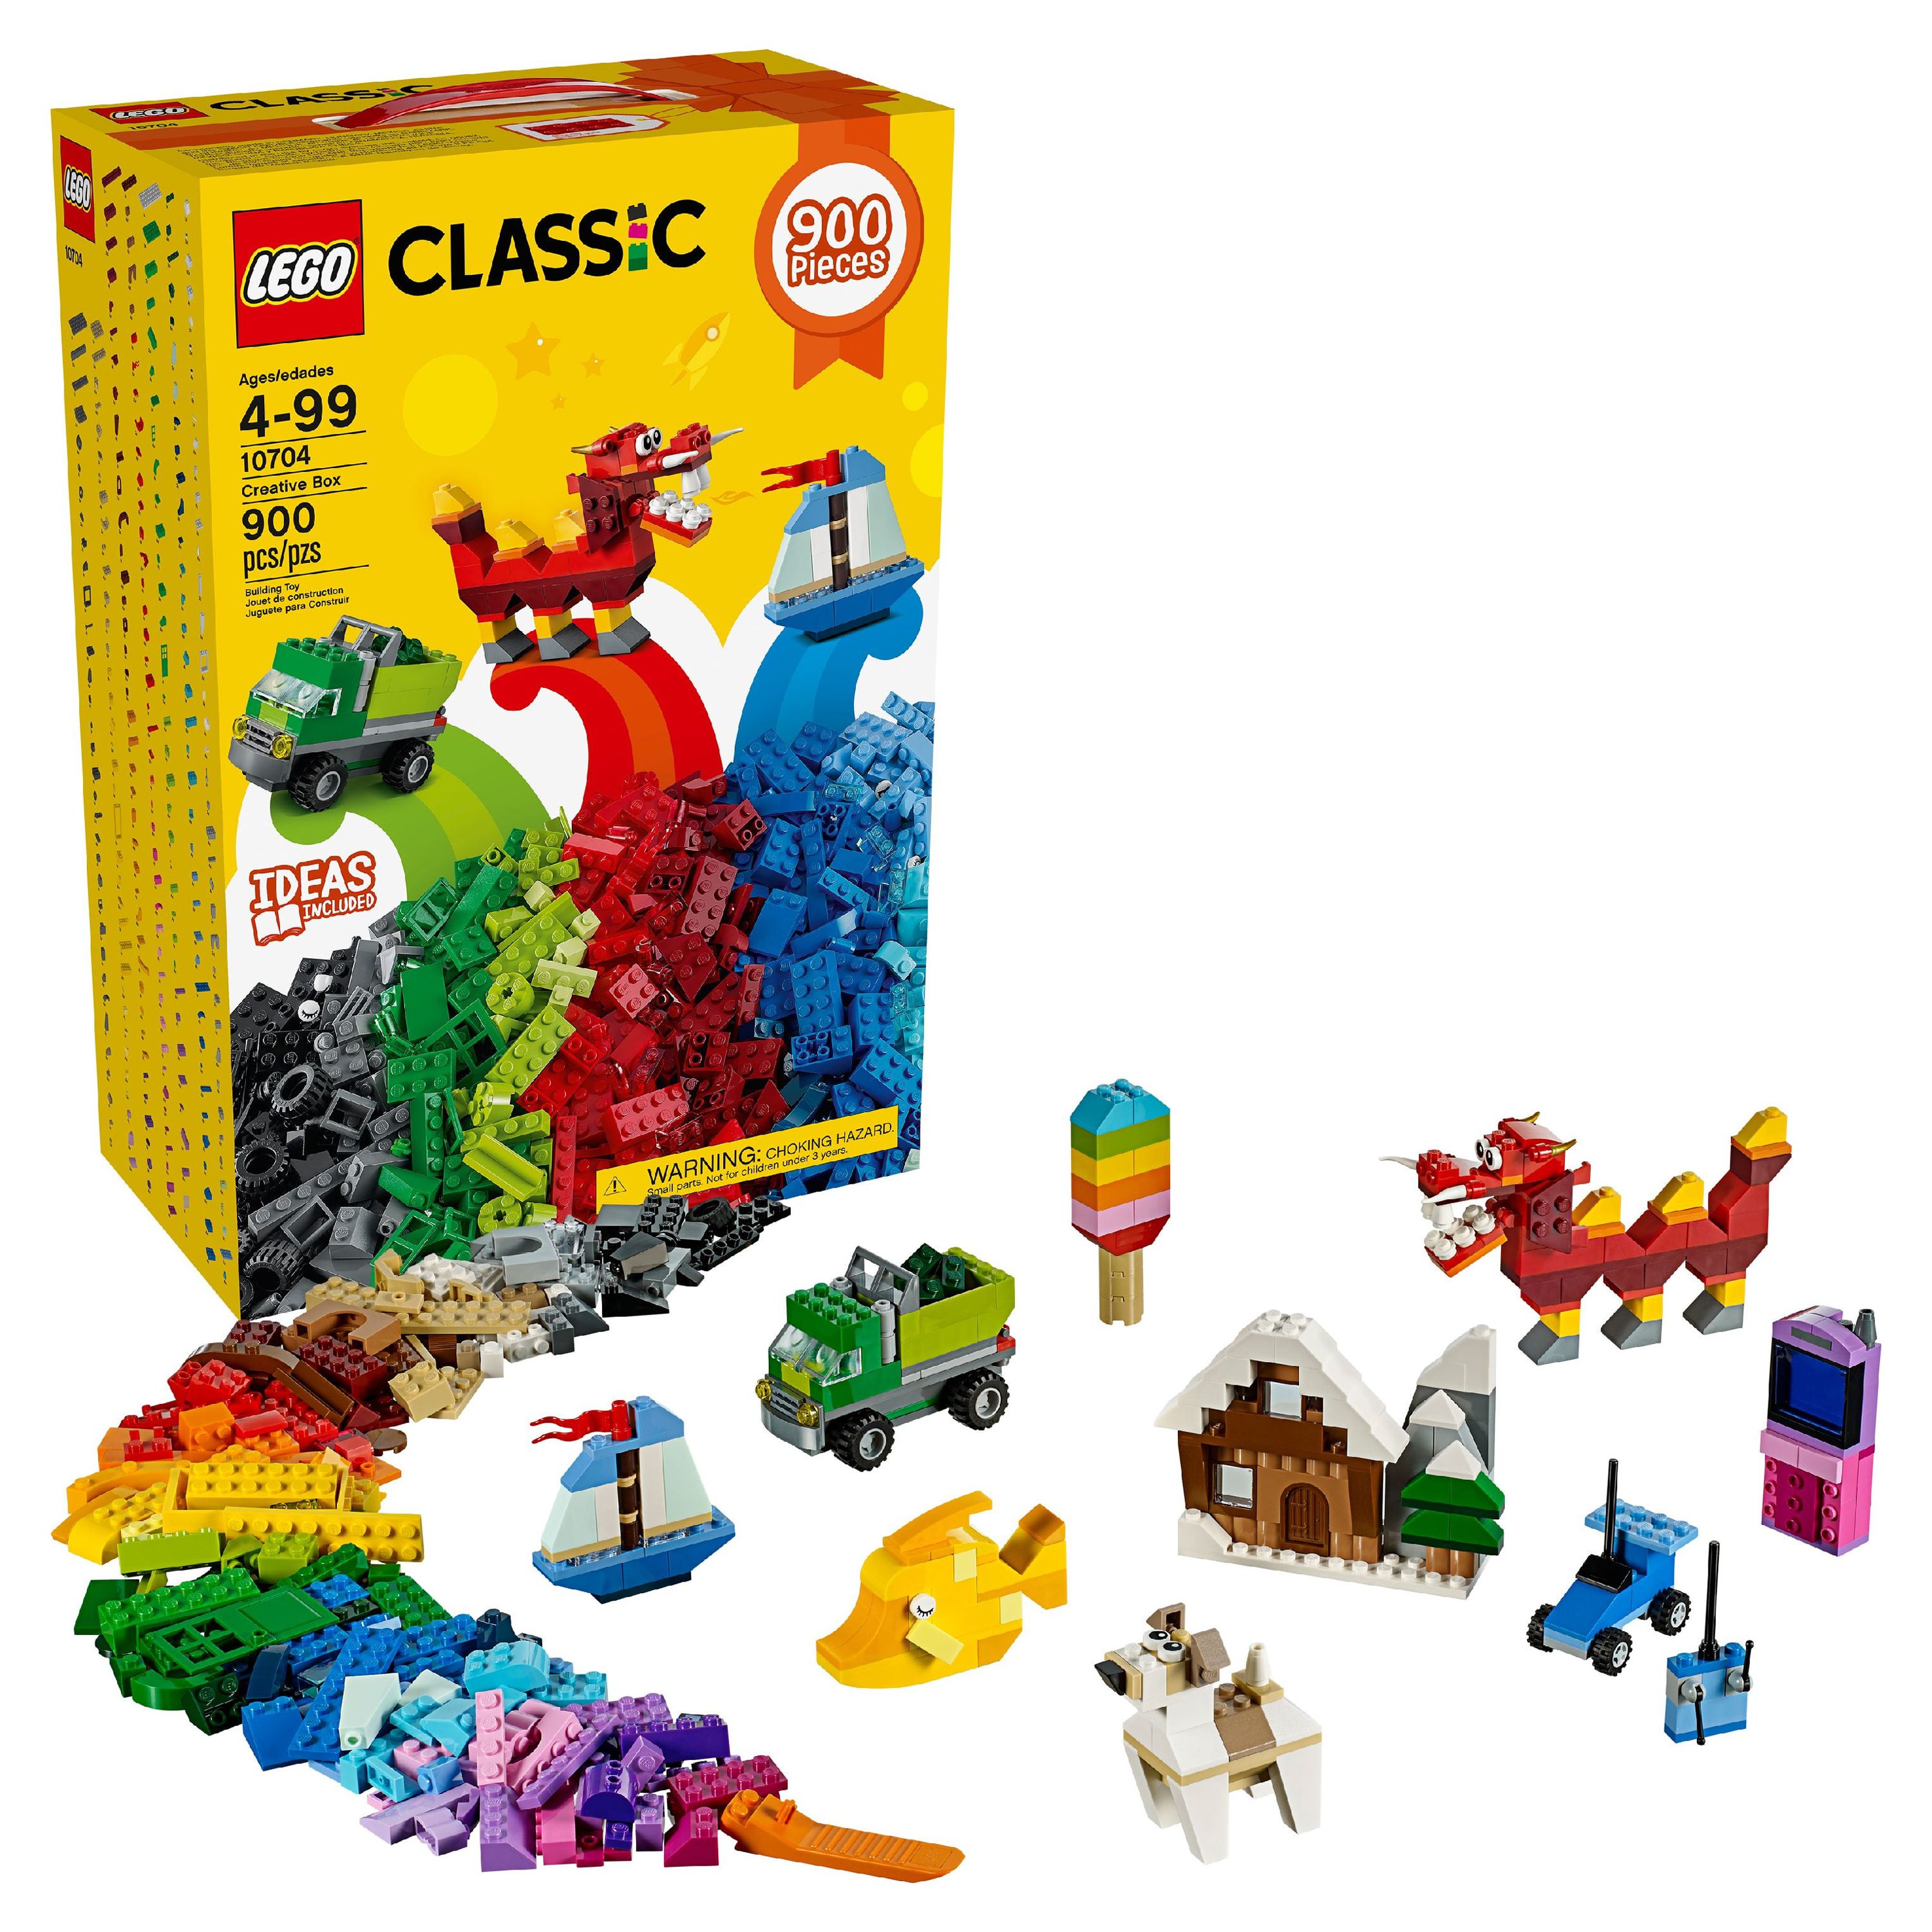 LEGO Classic Creative Box 10704 Building Set (900 Pieces) - image 1 of 6